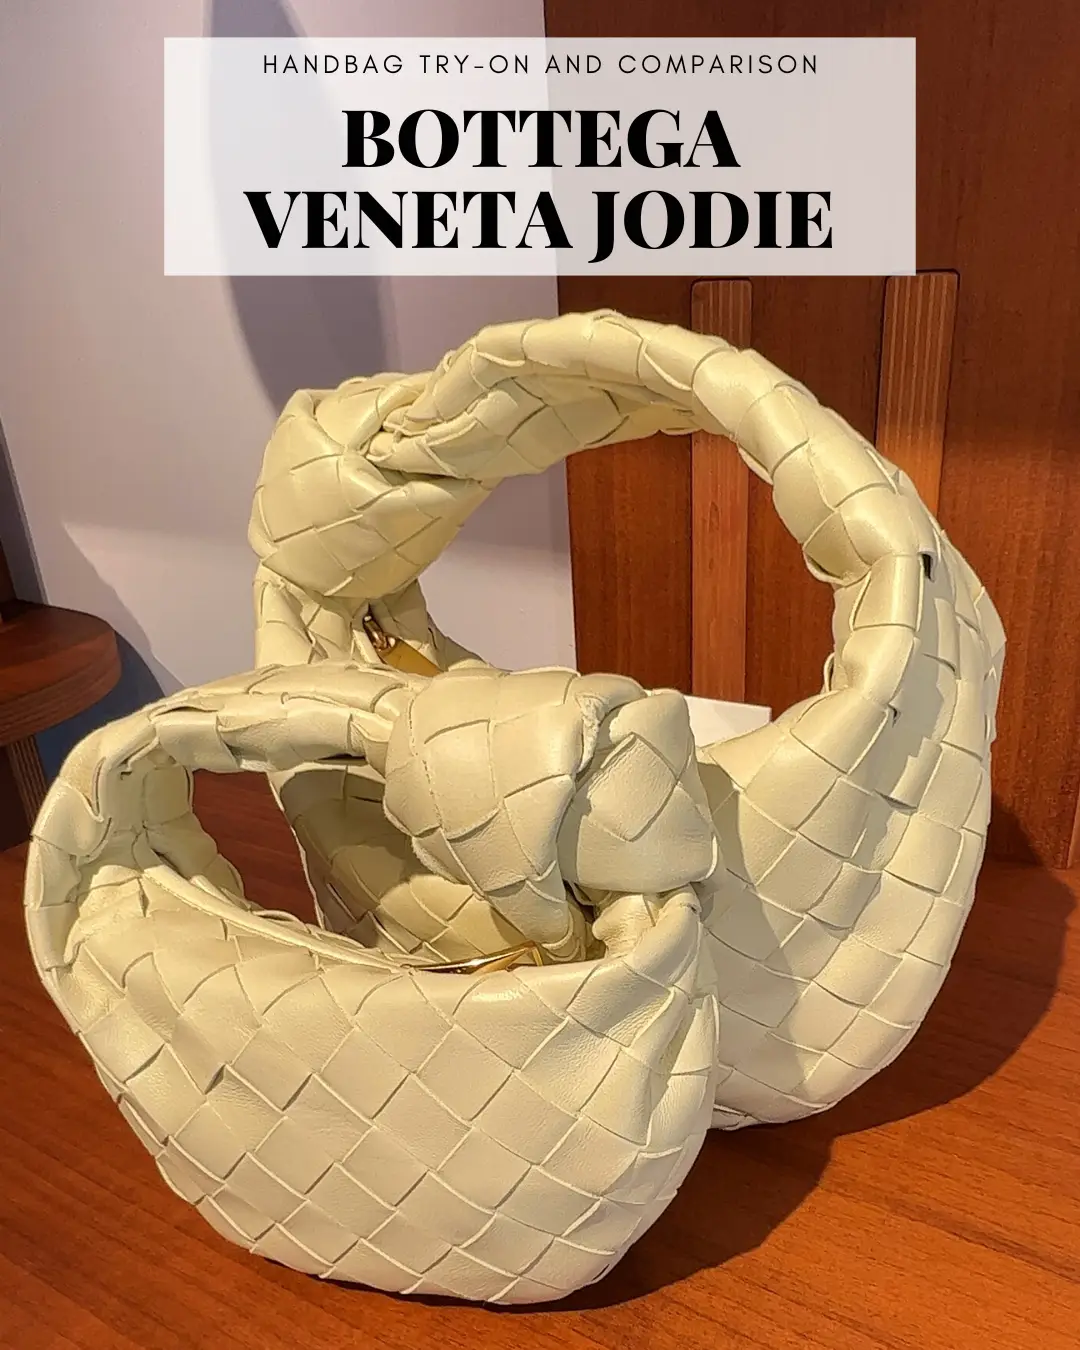 Bottega Veneta Jodie Teen Review  Gallery posted by Modeetchien